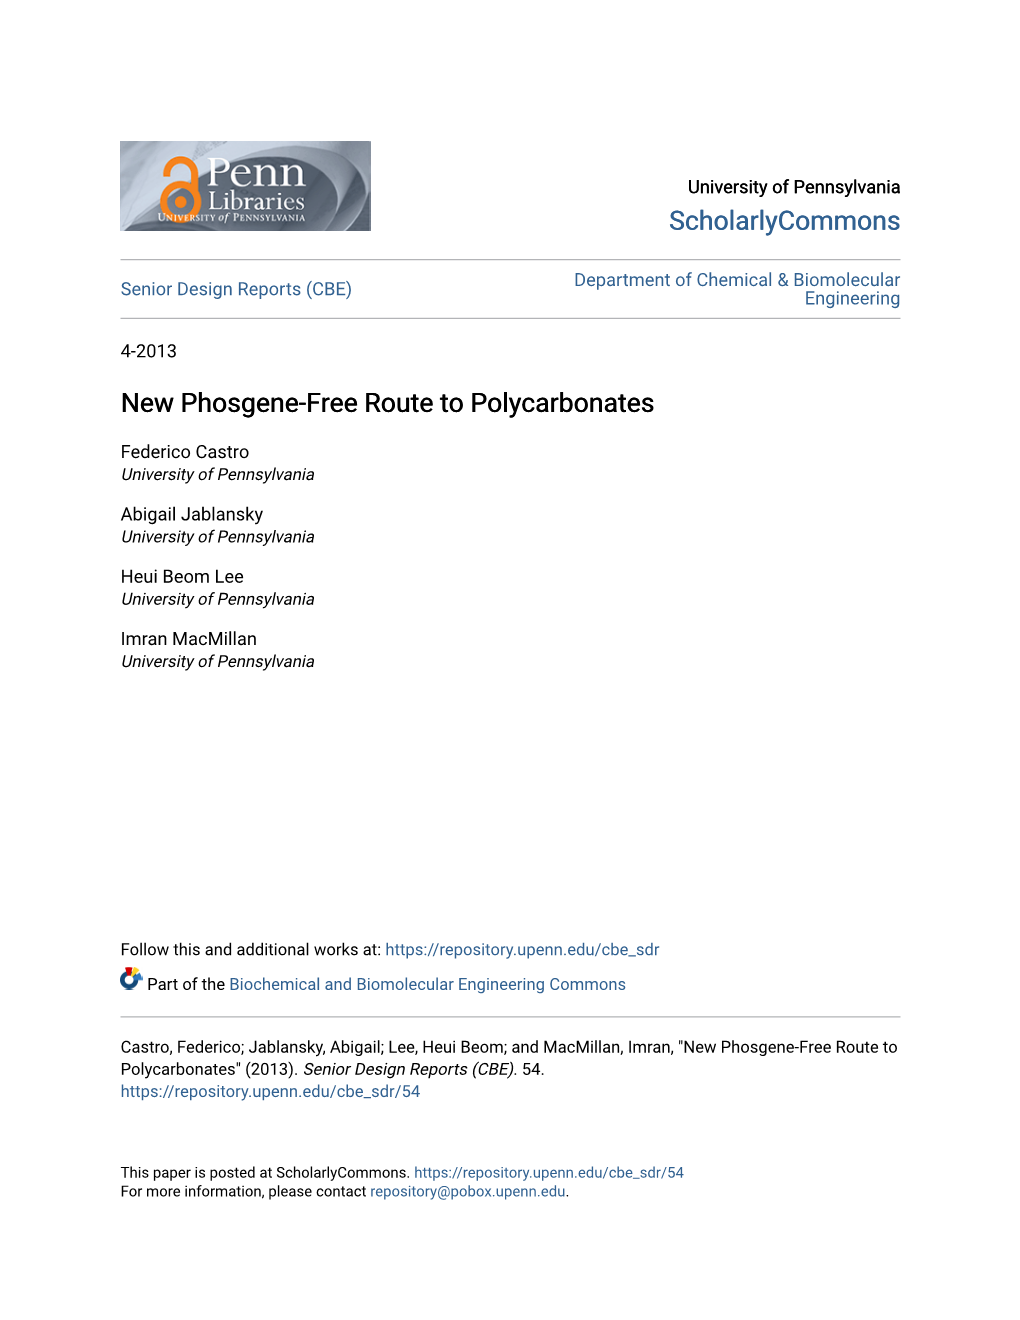 New Phosgene-Free Route to Polycarbonates